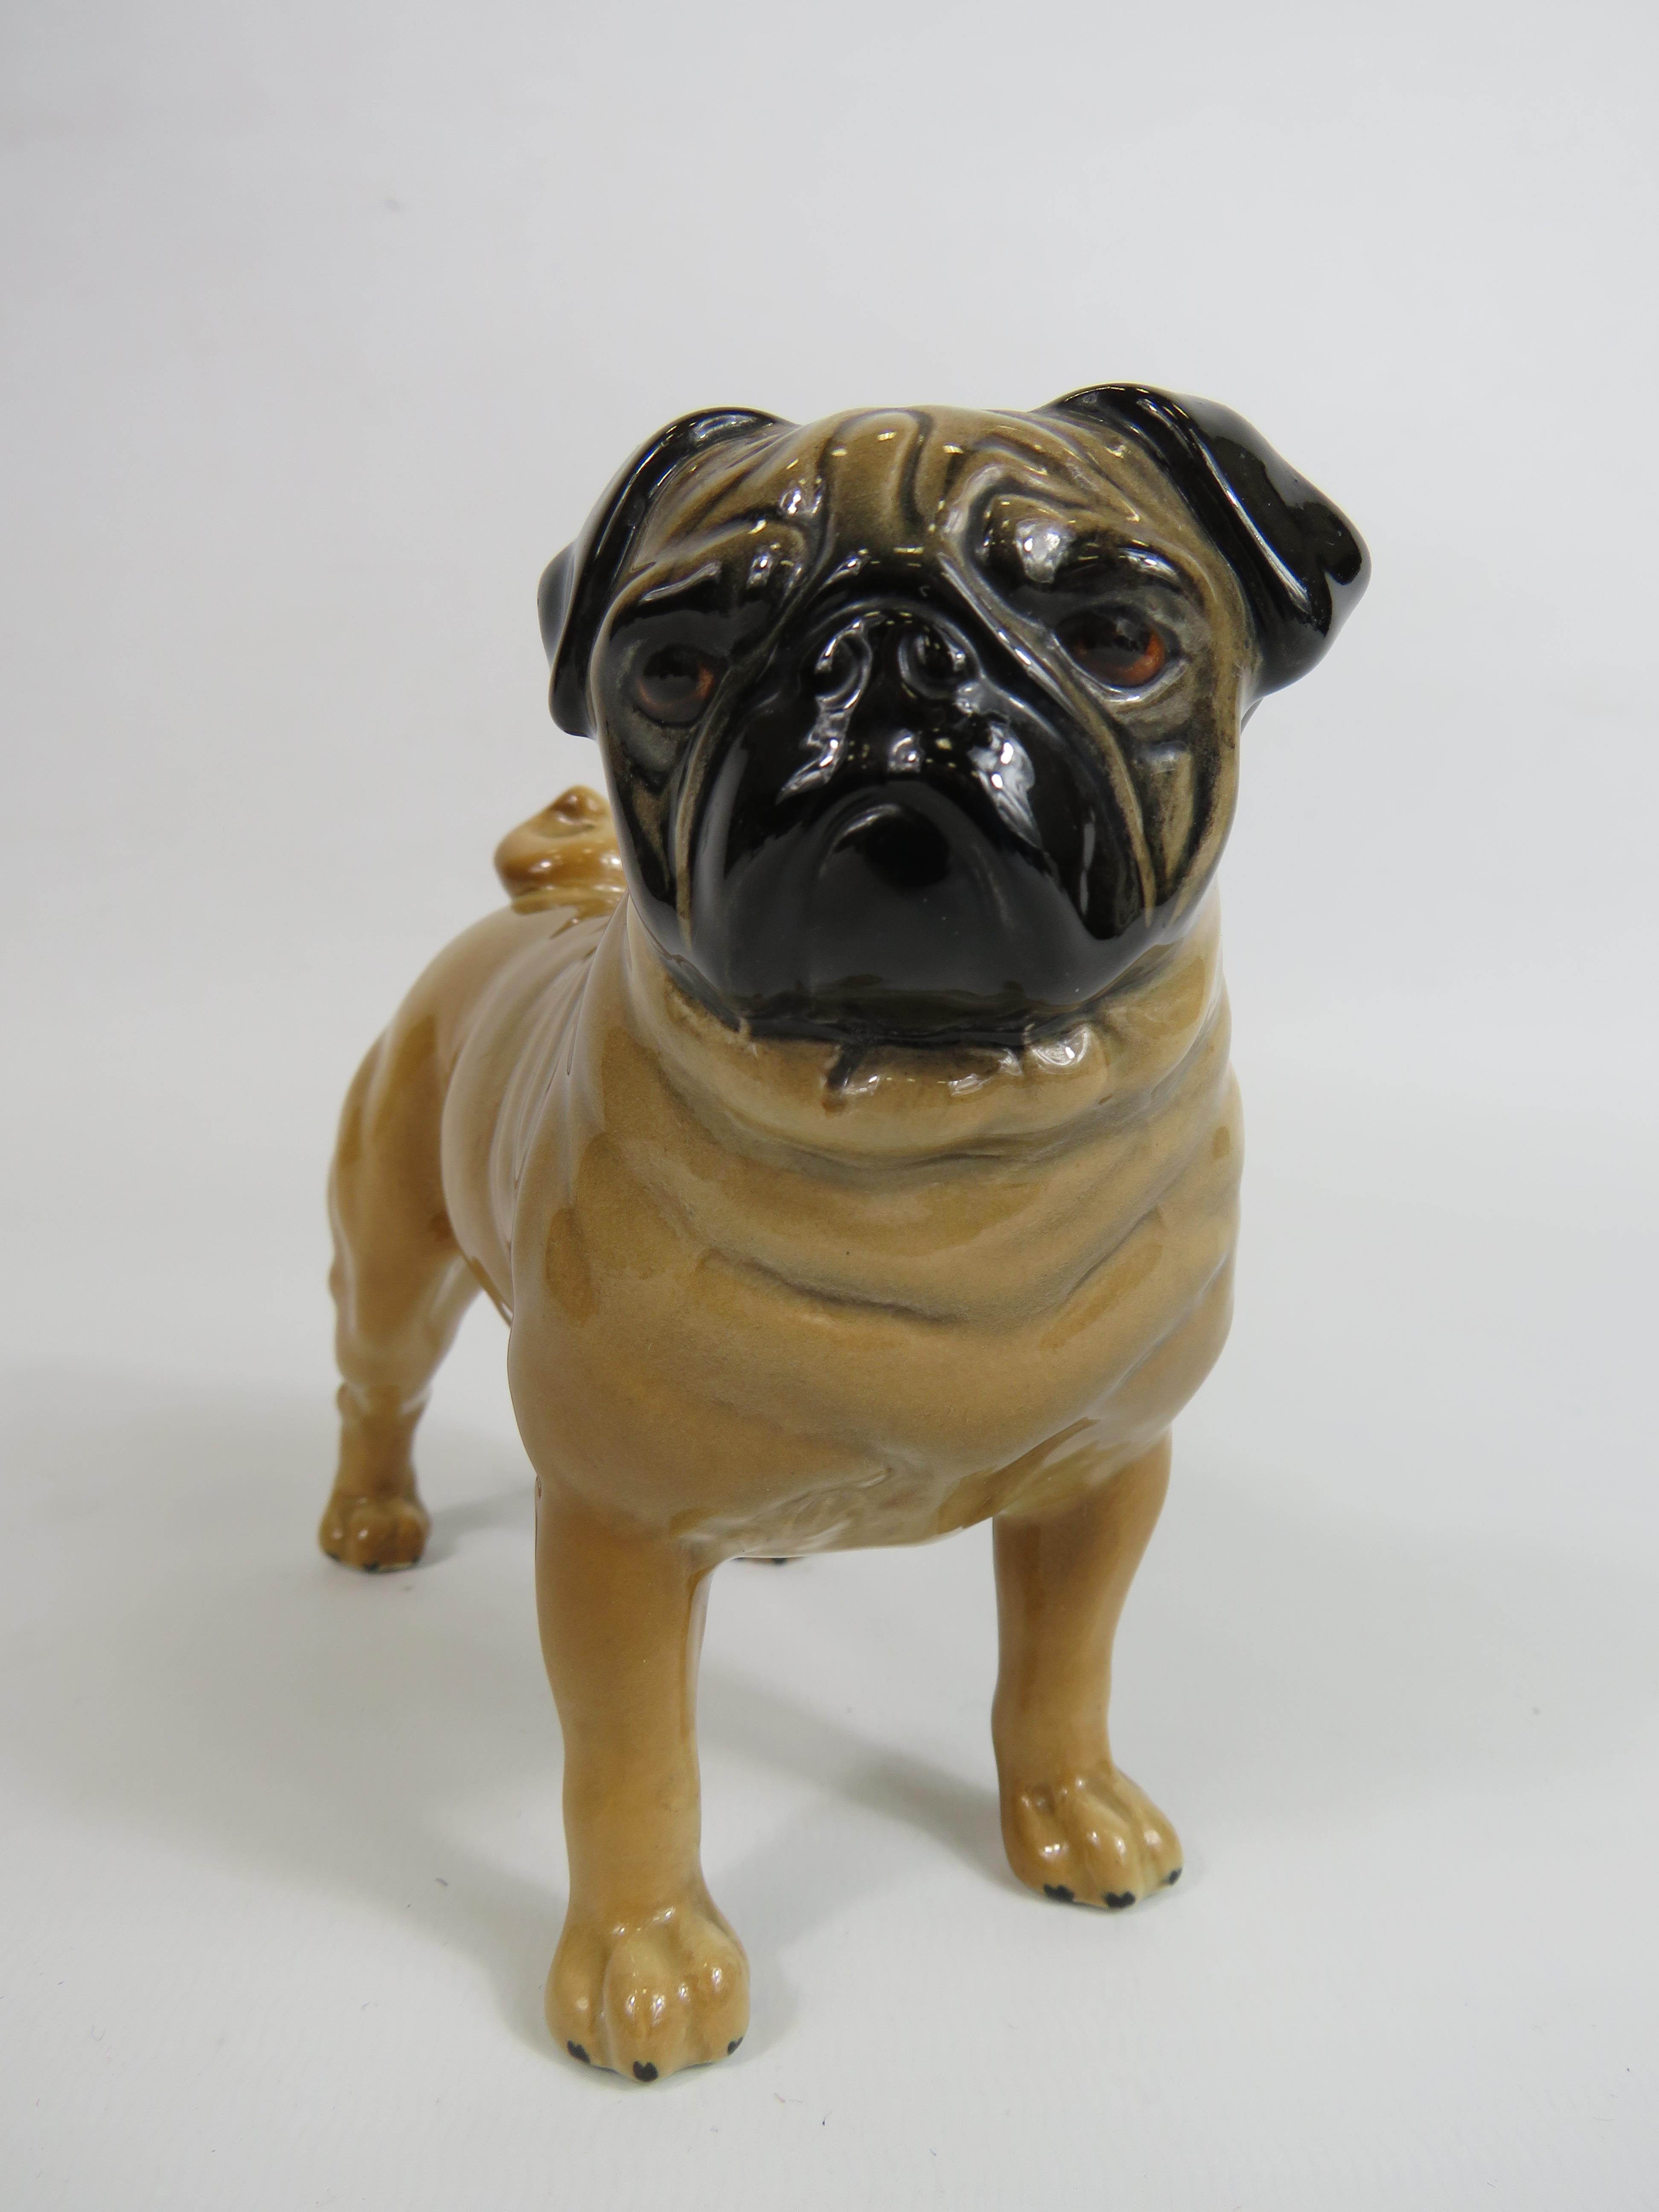 Beswick Pug Dog figurine Ch Cutmil Cupie, 11.5cm tall & 12cm long. - Image 2 of 4